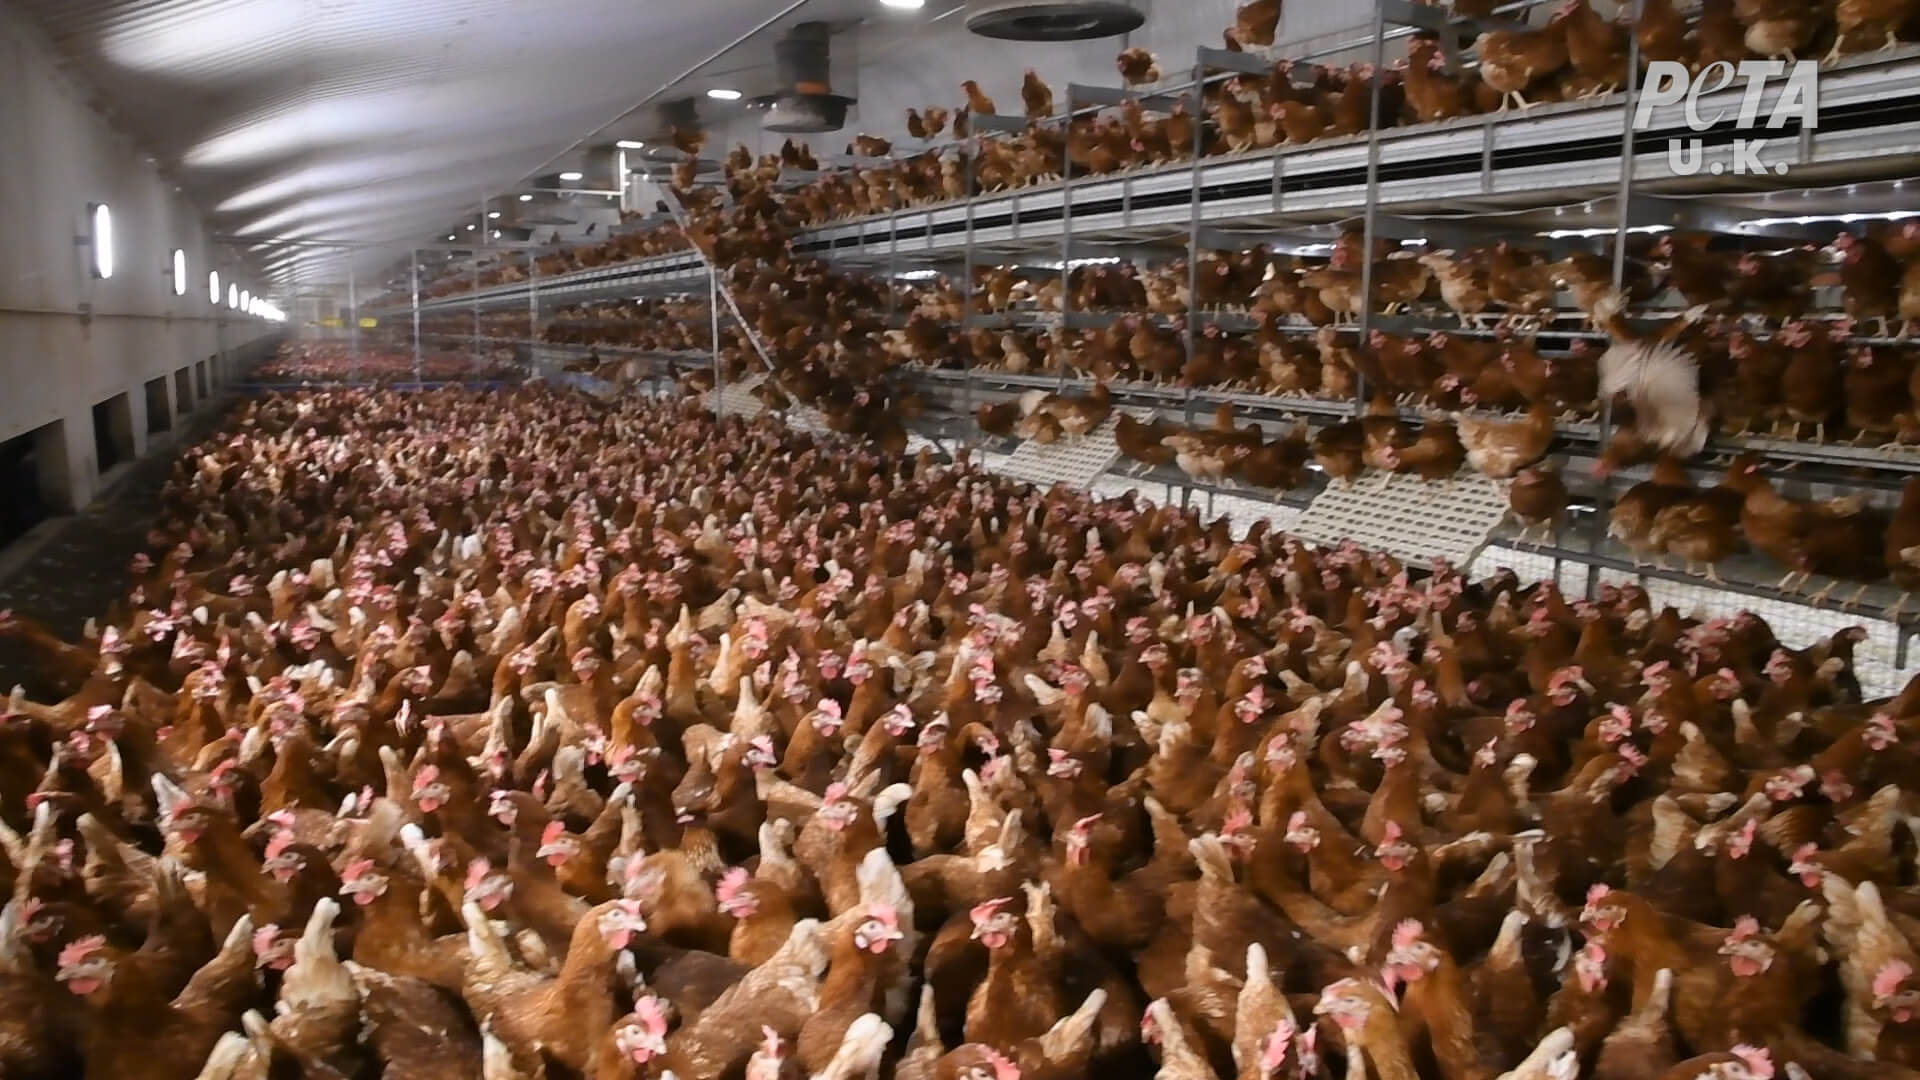 https://investigaciones.petalatino.com/wp-content/uploads/2021/02/VEG-UK-Happy-Egg-Investigation-Chickens-Hens-01.jpg